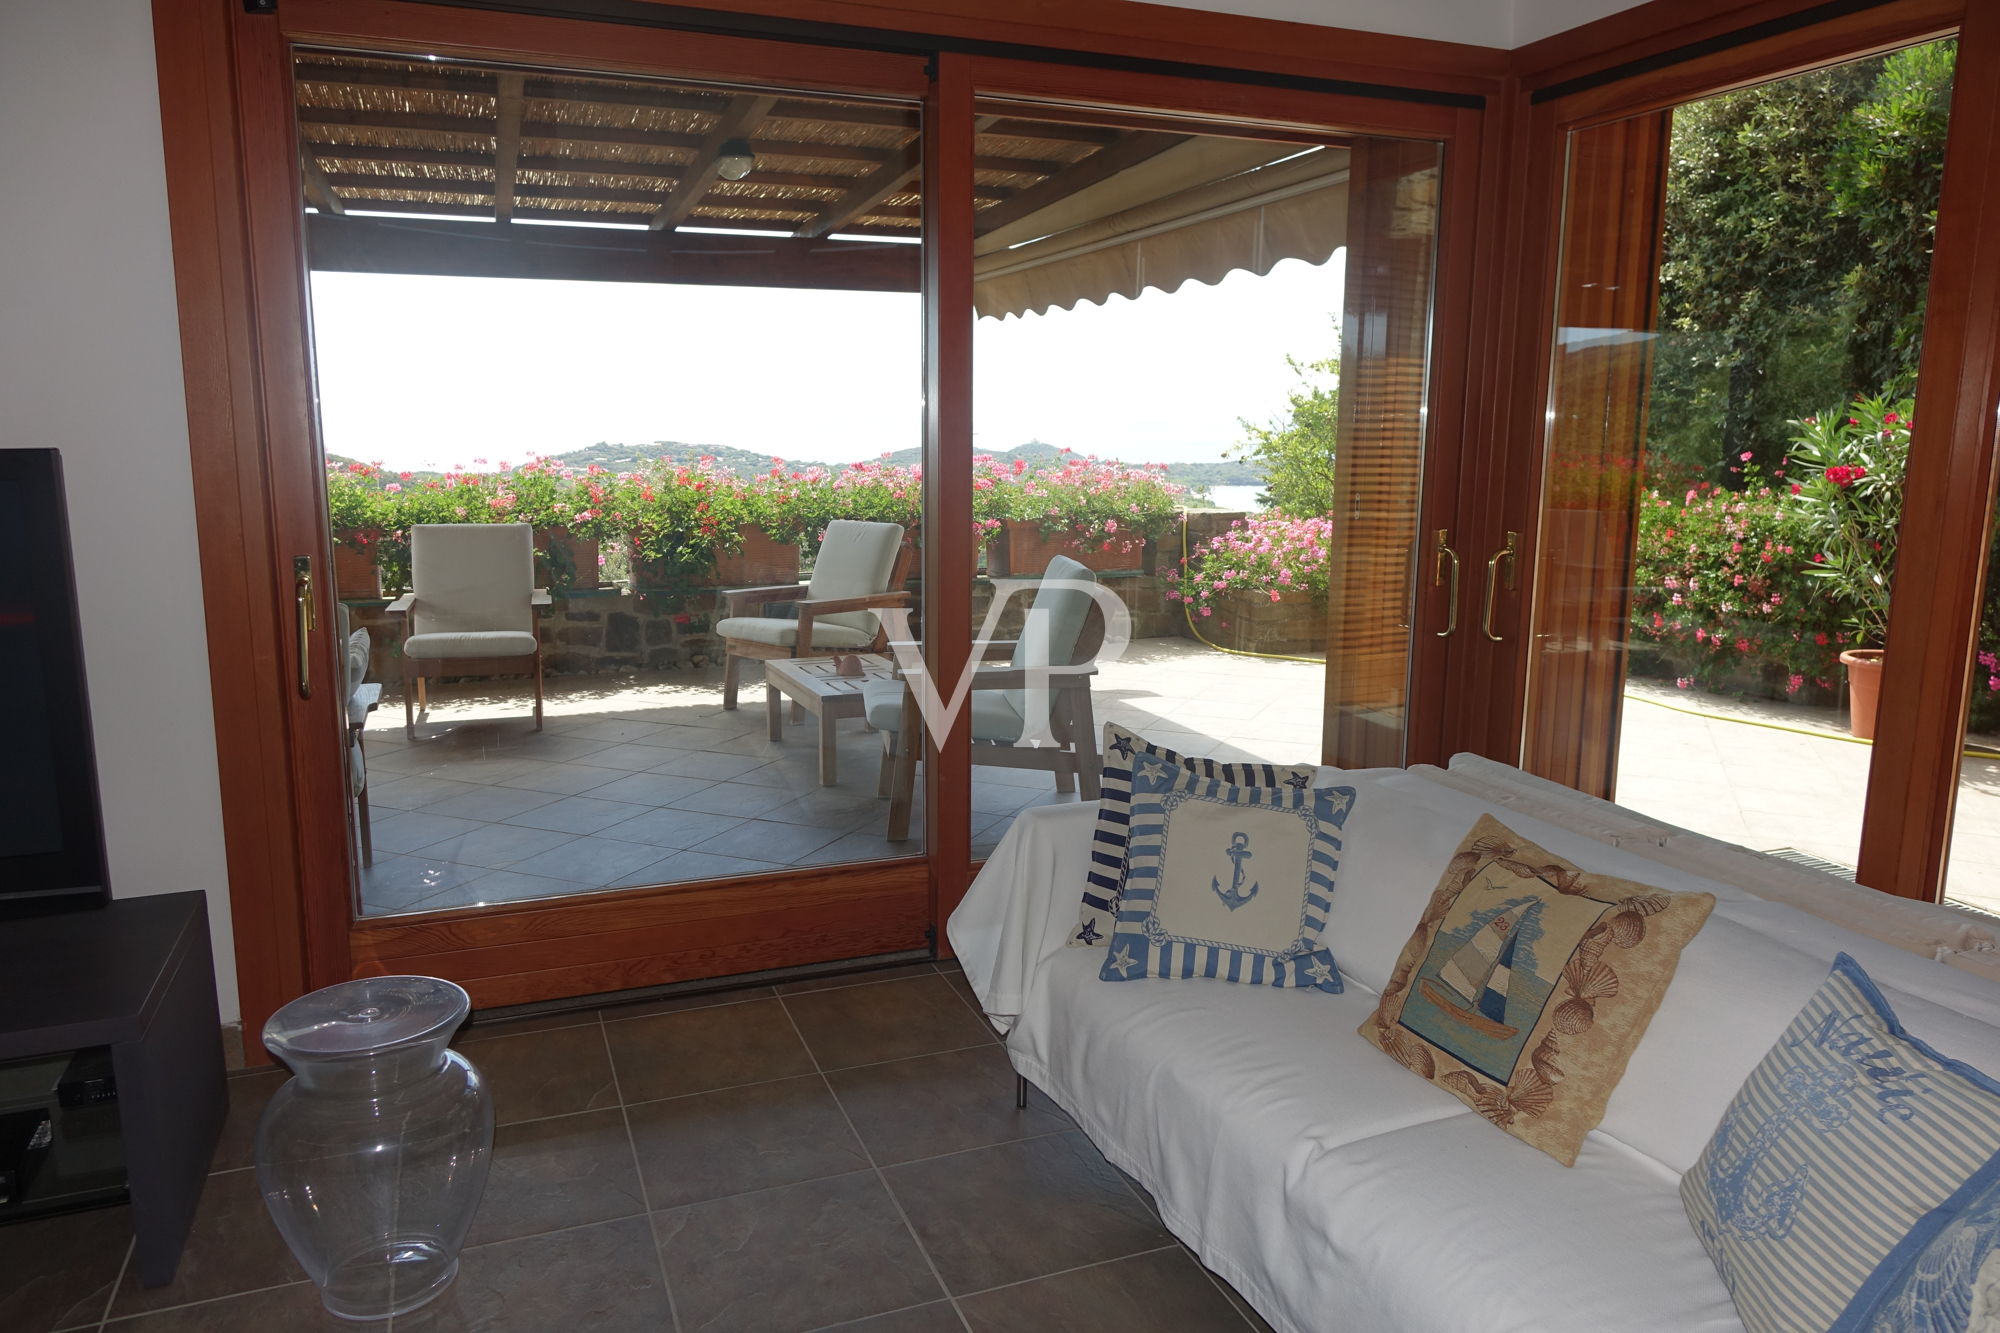 Villa esclusiva con vista panoramica mozzafiato a 180° a Punta Ala